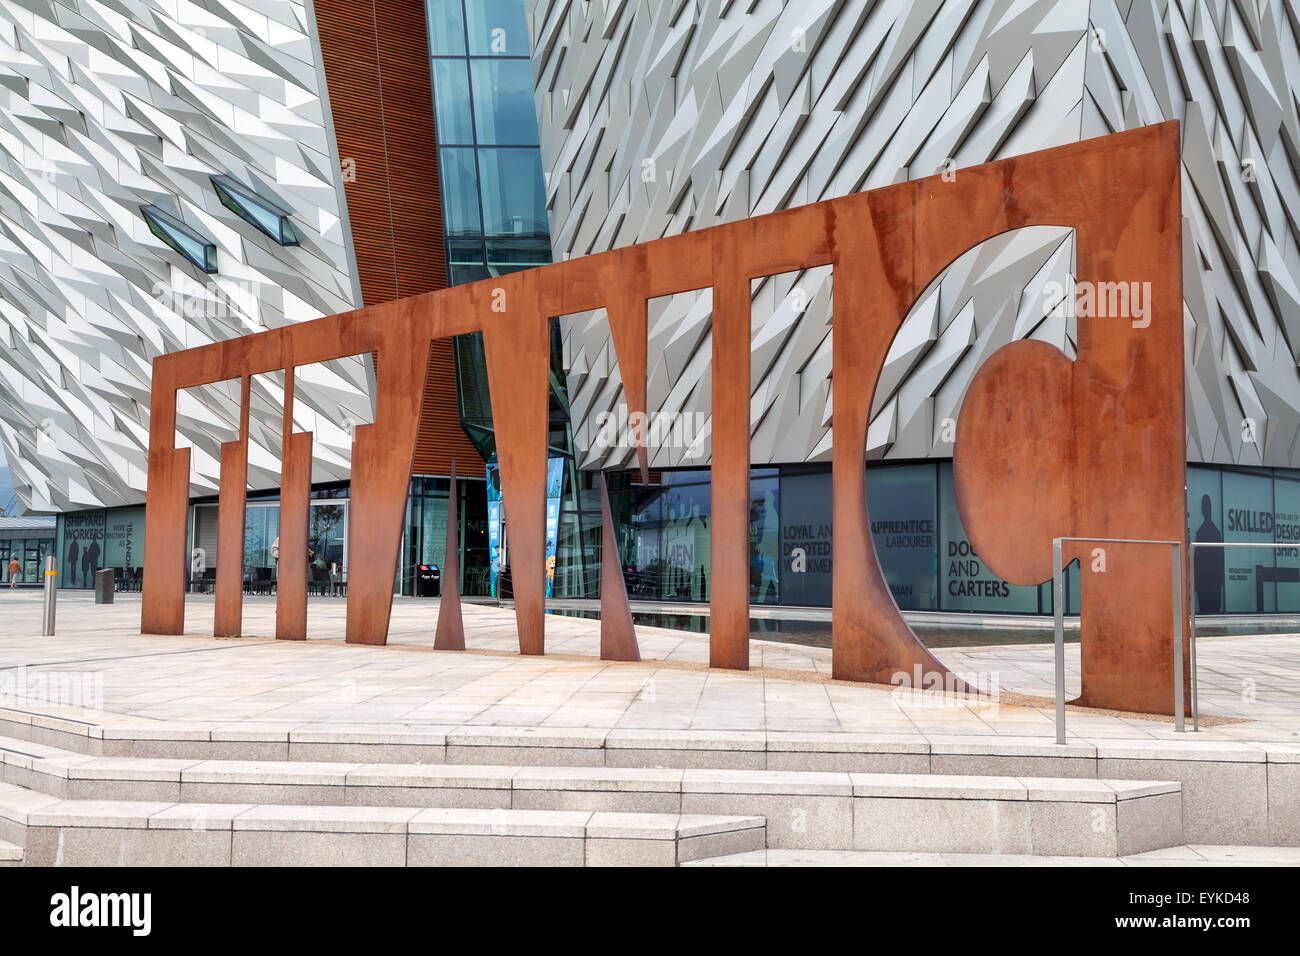 Titanic Belfast sign Banque D'Images